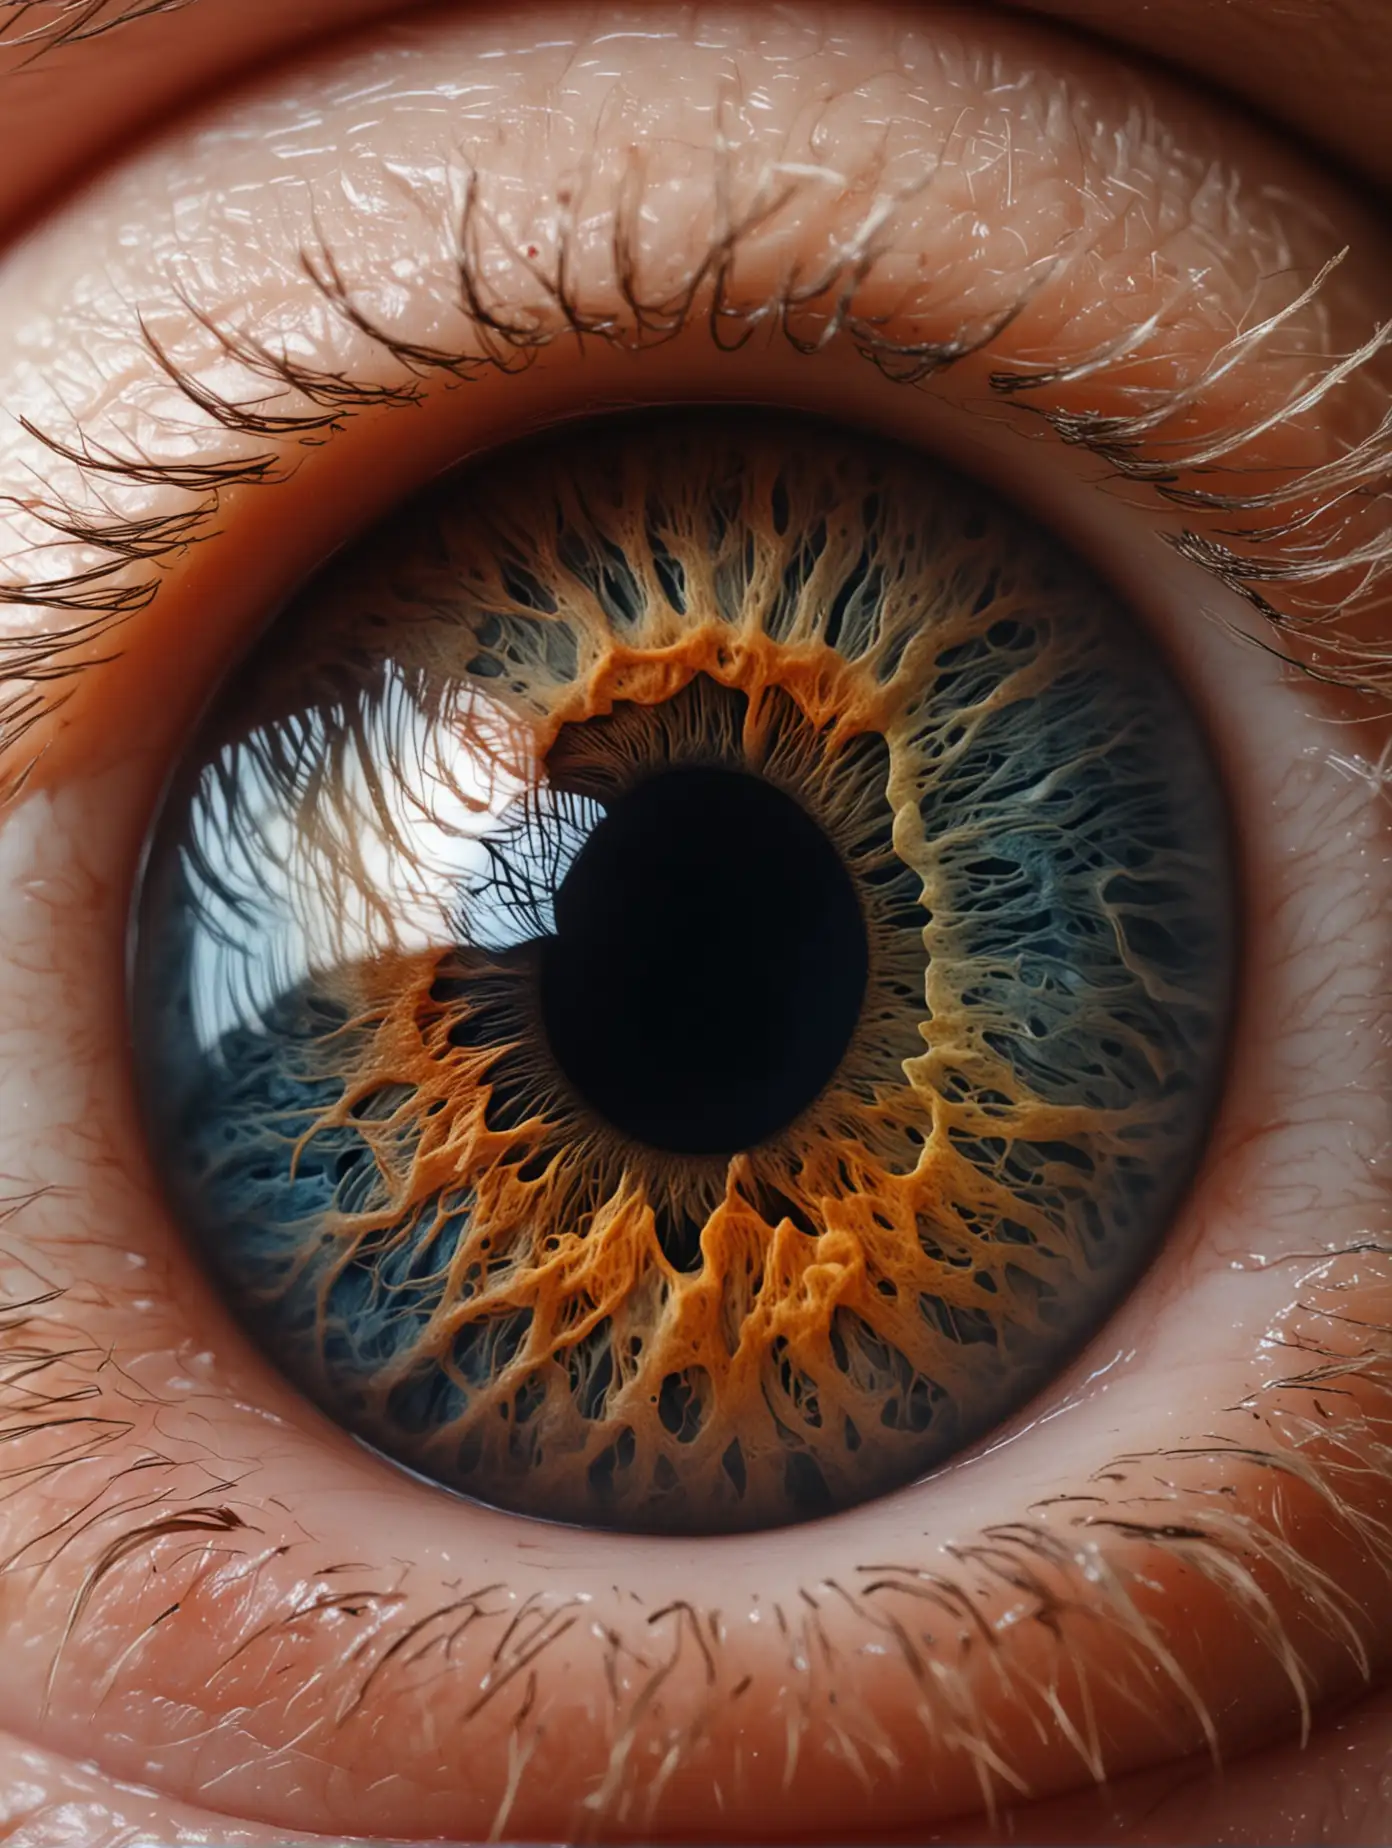 Vivid Colorful CloseUp of Human Eyeball